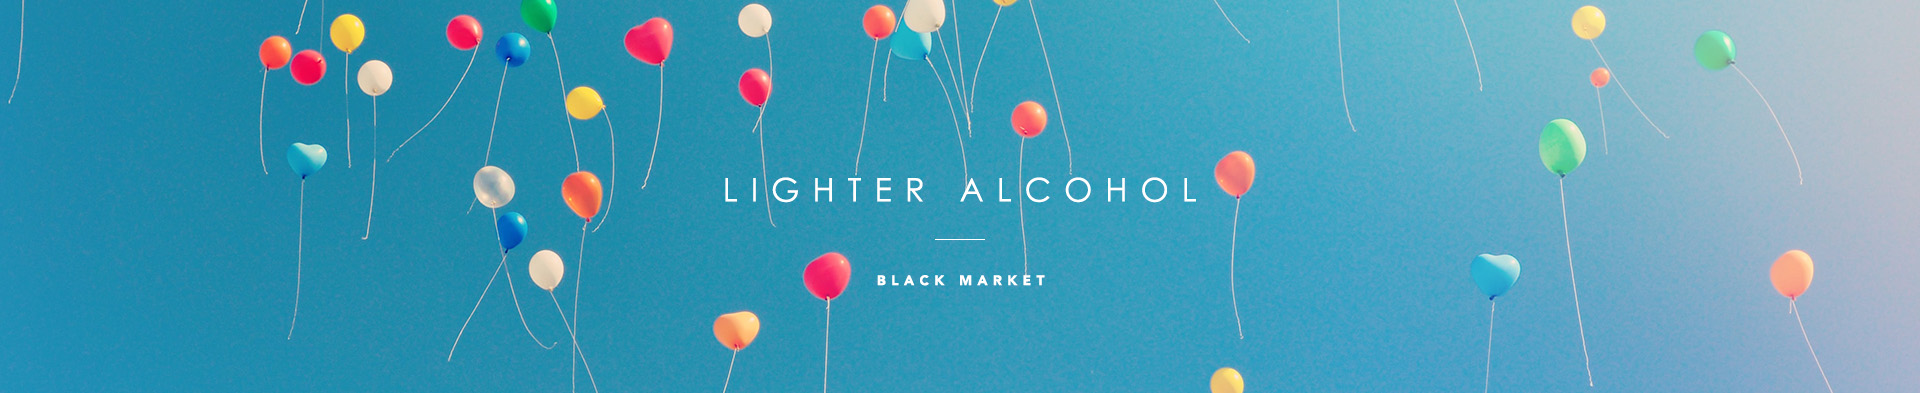 Lighter Alcohol Wines Banner